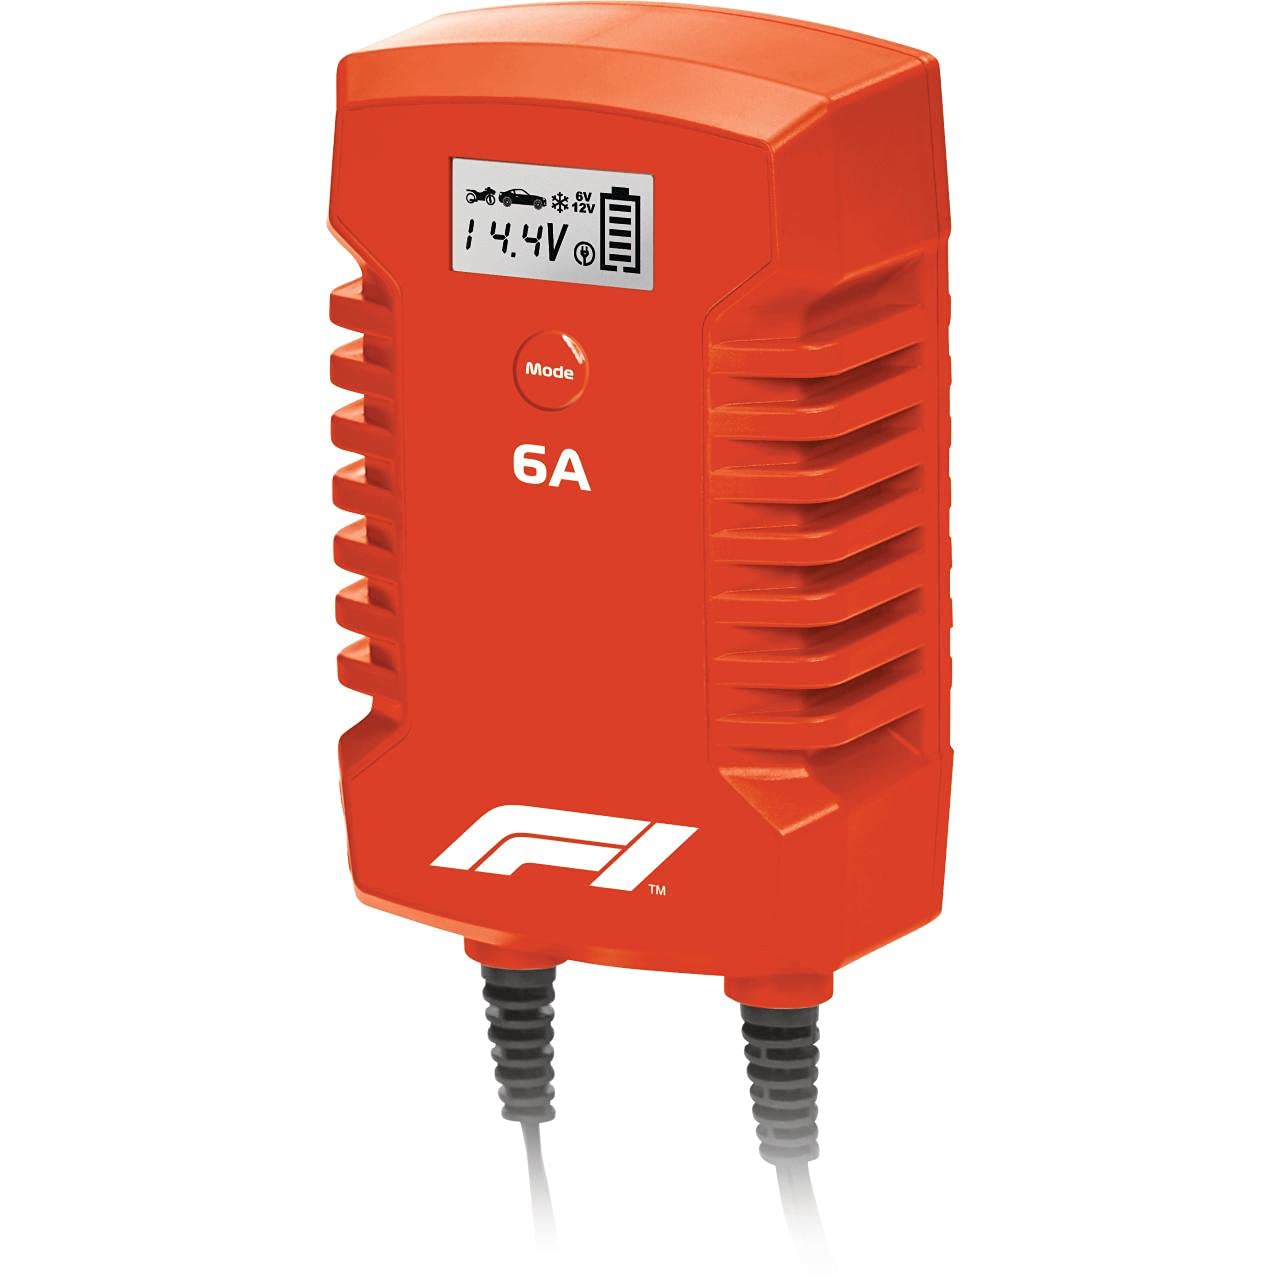 Formula 10794 1 Mikroprozessor Batterie Ladegerät 6 Ampere für 44359 V, 7-stufig,,Power-Supply, Auto Erhaltungsladegerät Erhaltungsladegerät mit LCD Display von Formula 1